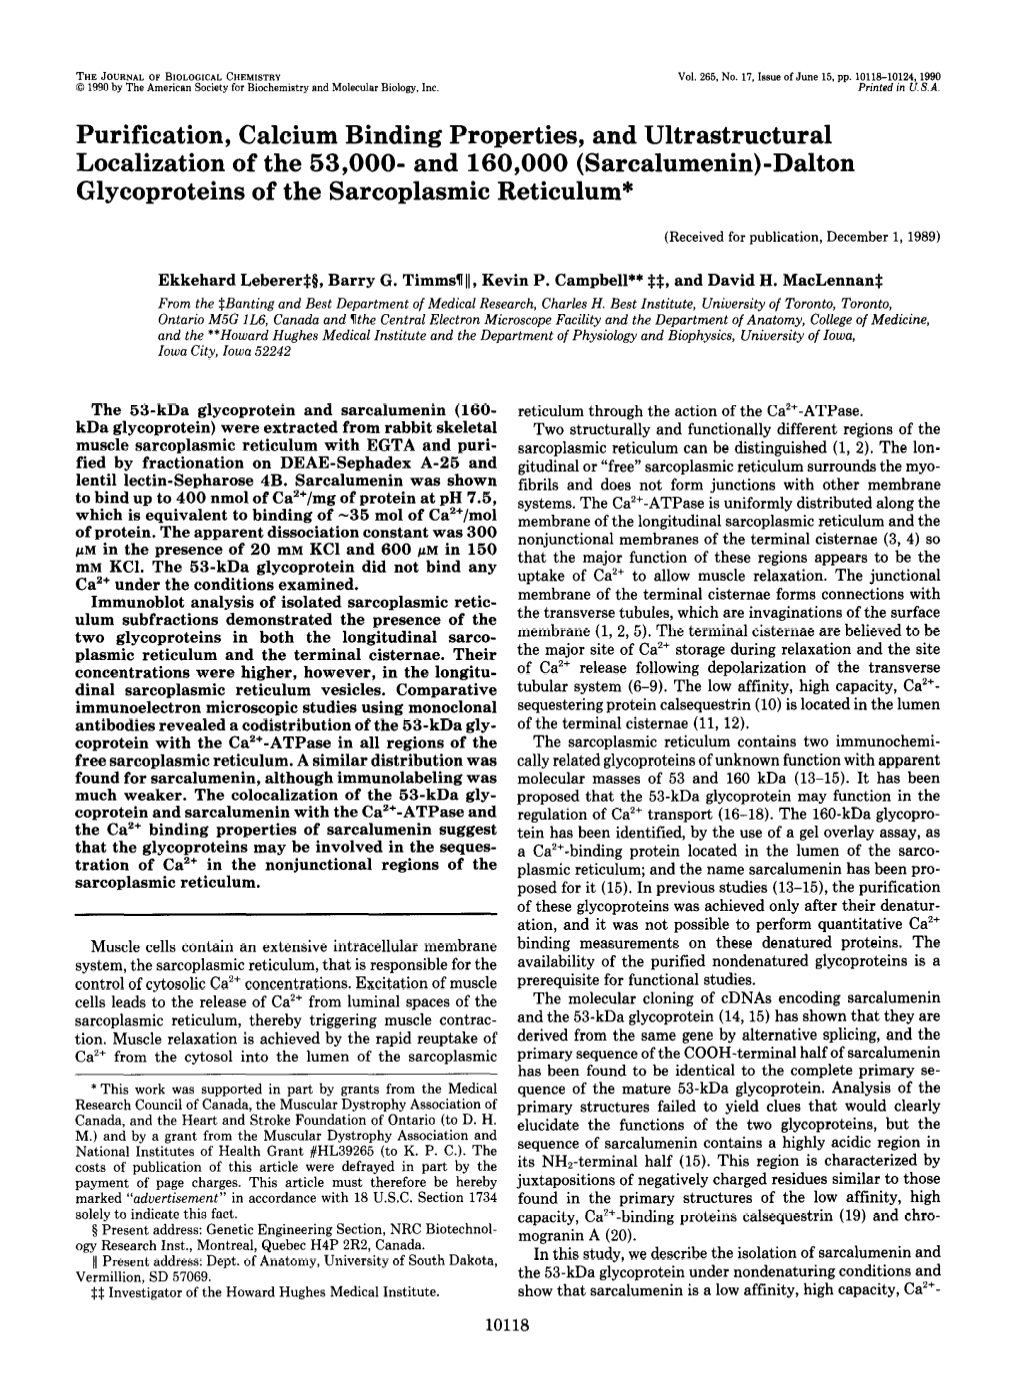 Sarcalumenin)-Dalton Glycoproteins of the Sarcoplasmic Reticulum*